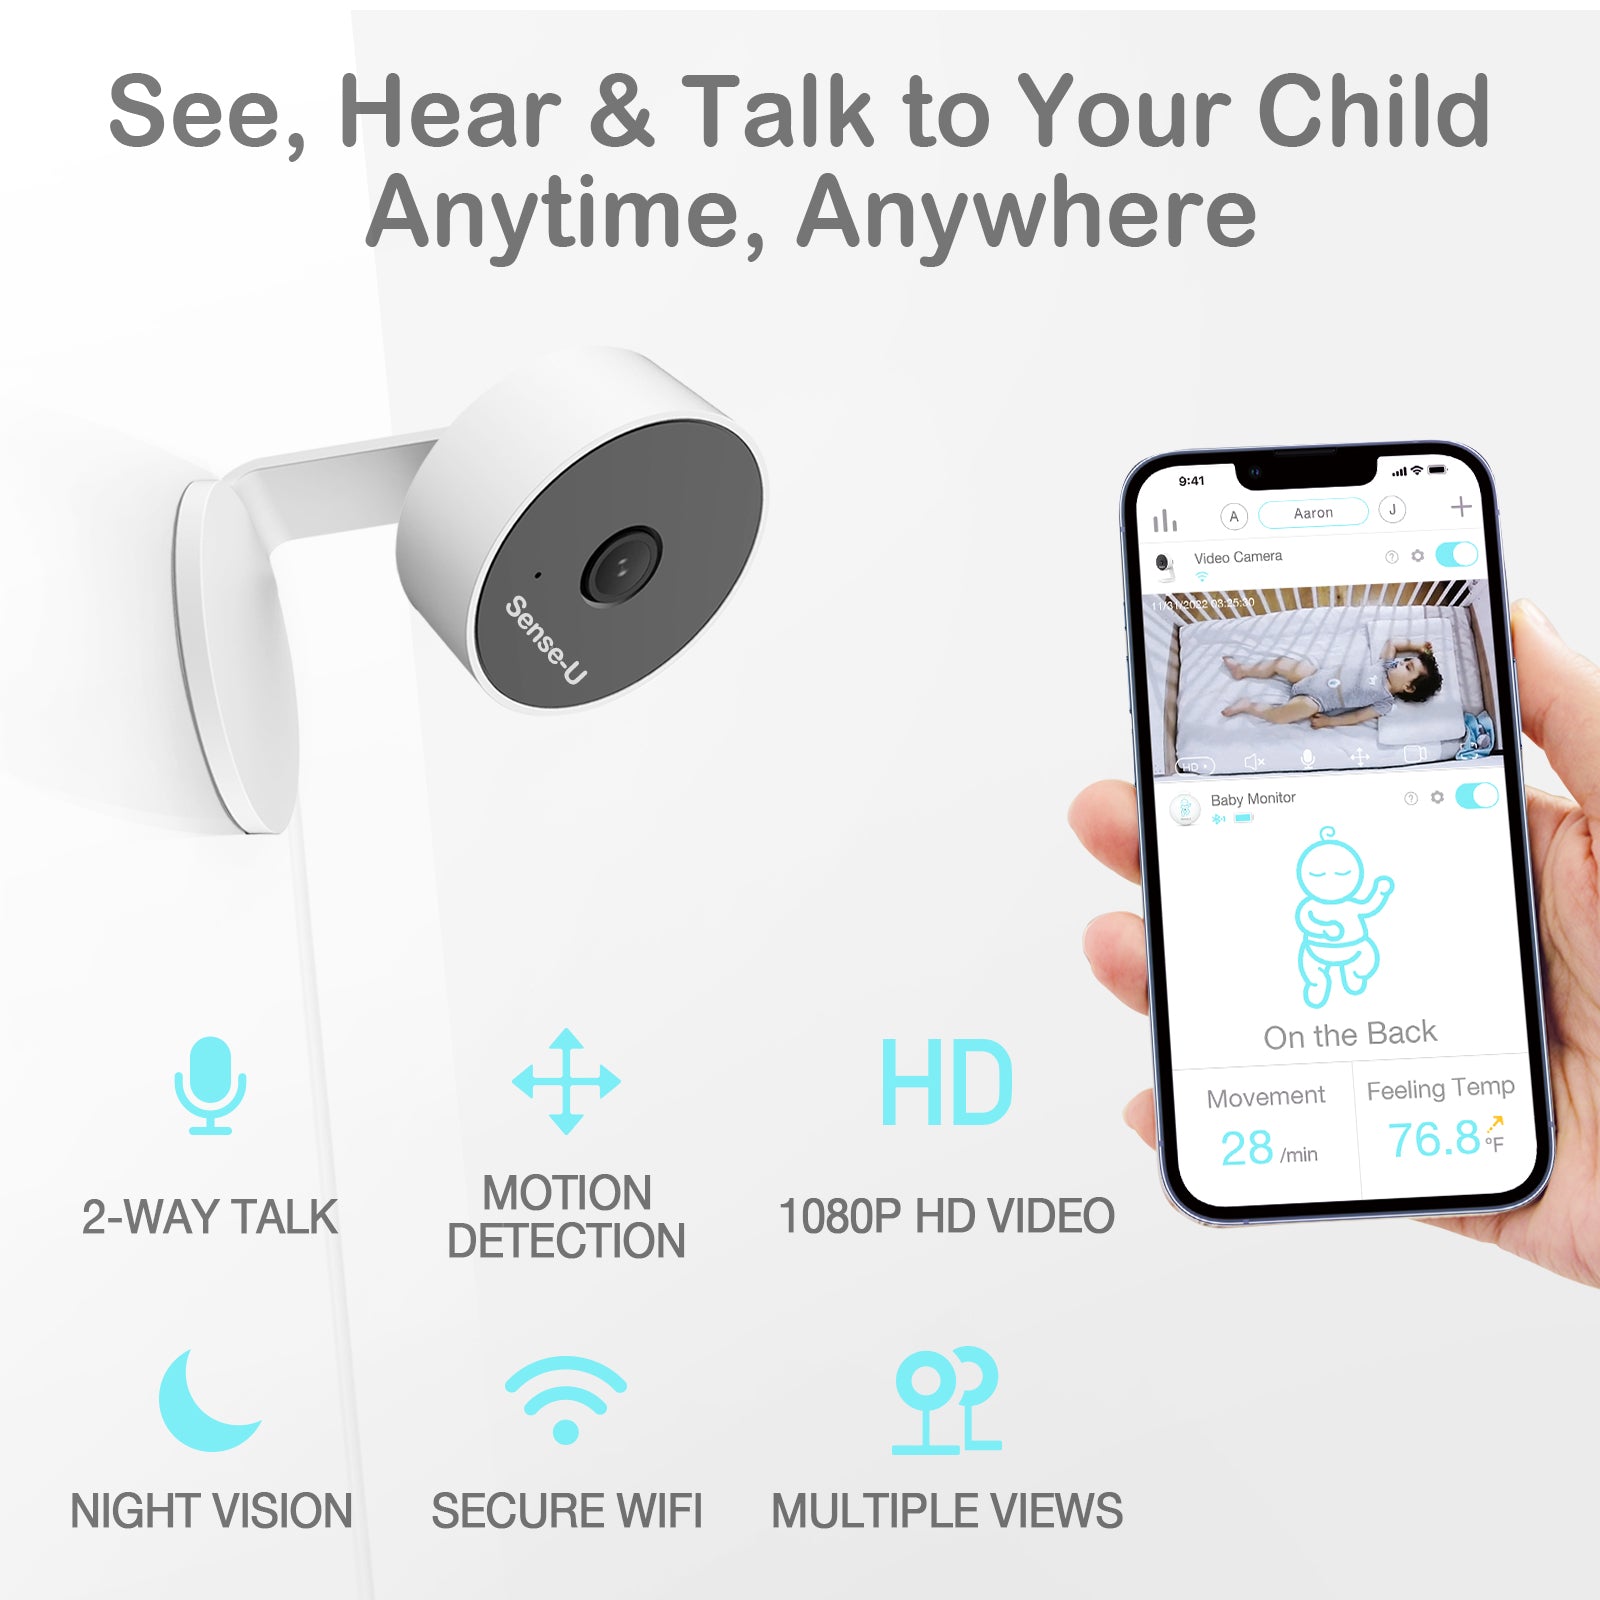 Sense-U Video Camera 2: 1080P HD, 2-Way Talk, Night Vision,Secure WiFi